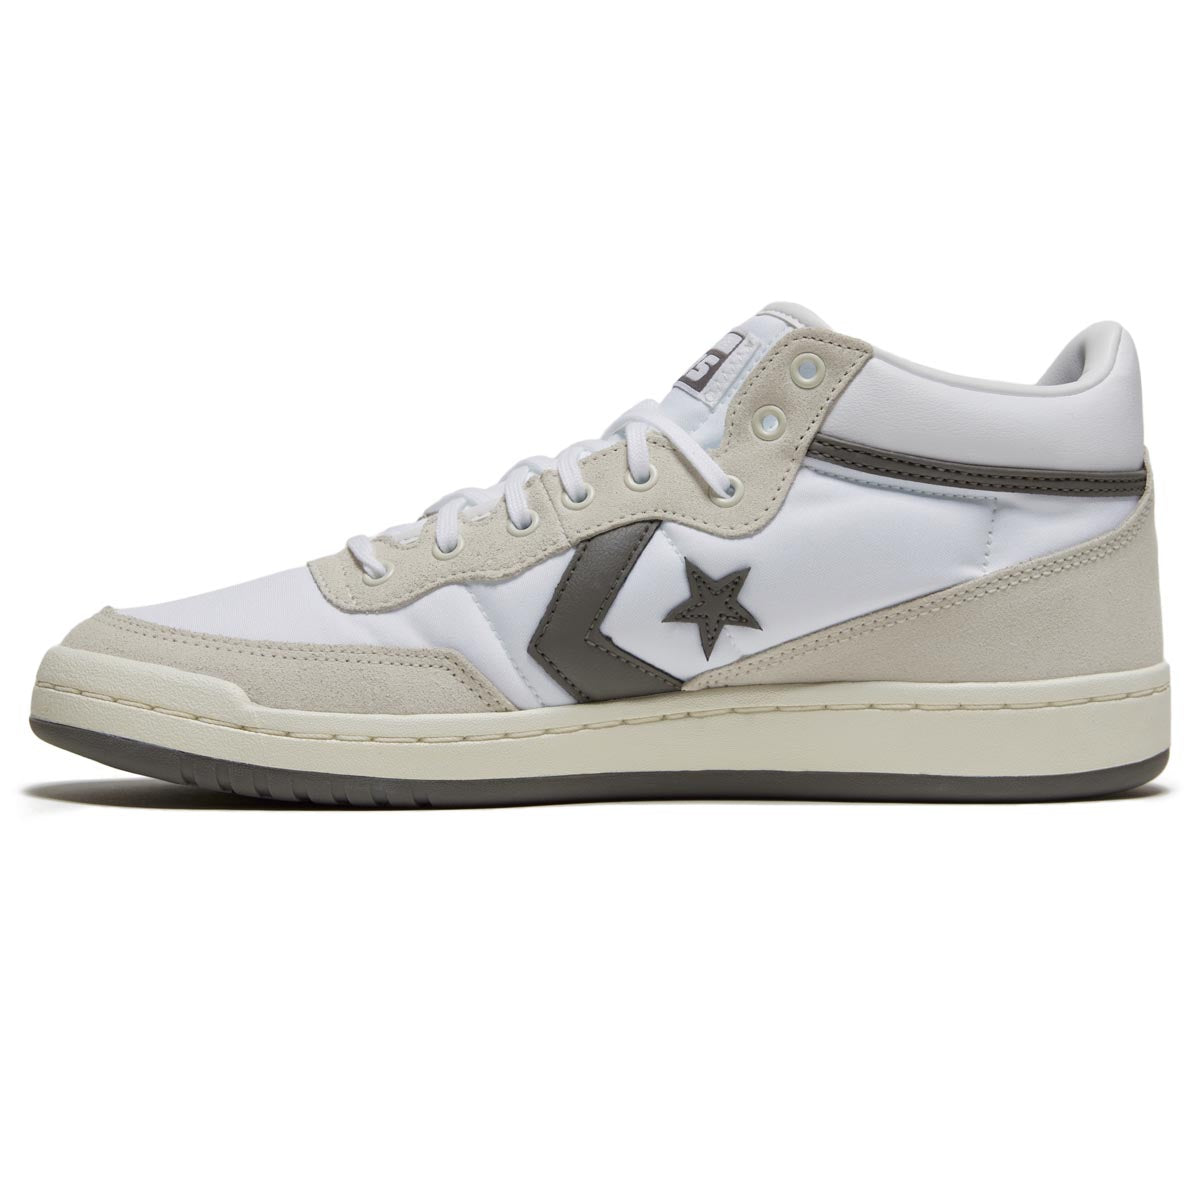 Converse Fastbreak Pro Suede Nylon Mid Shoes - White/Vaporous Gray image 2